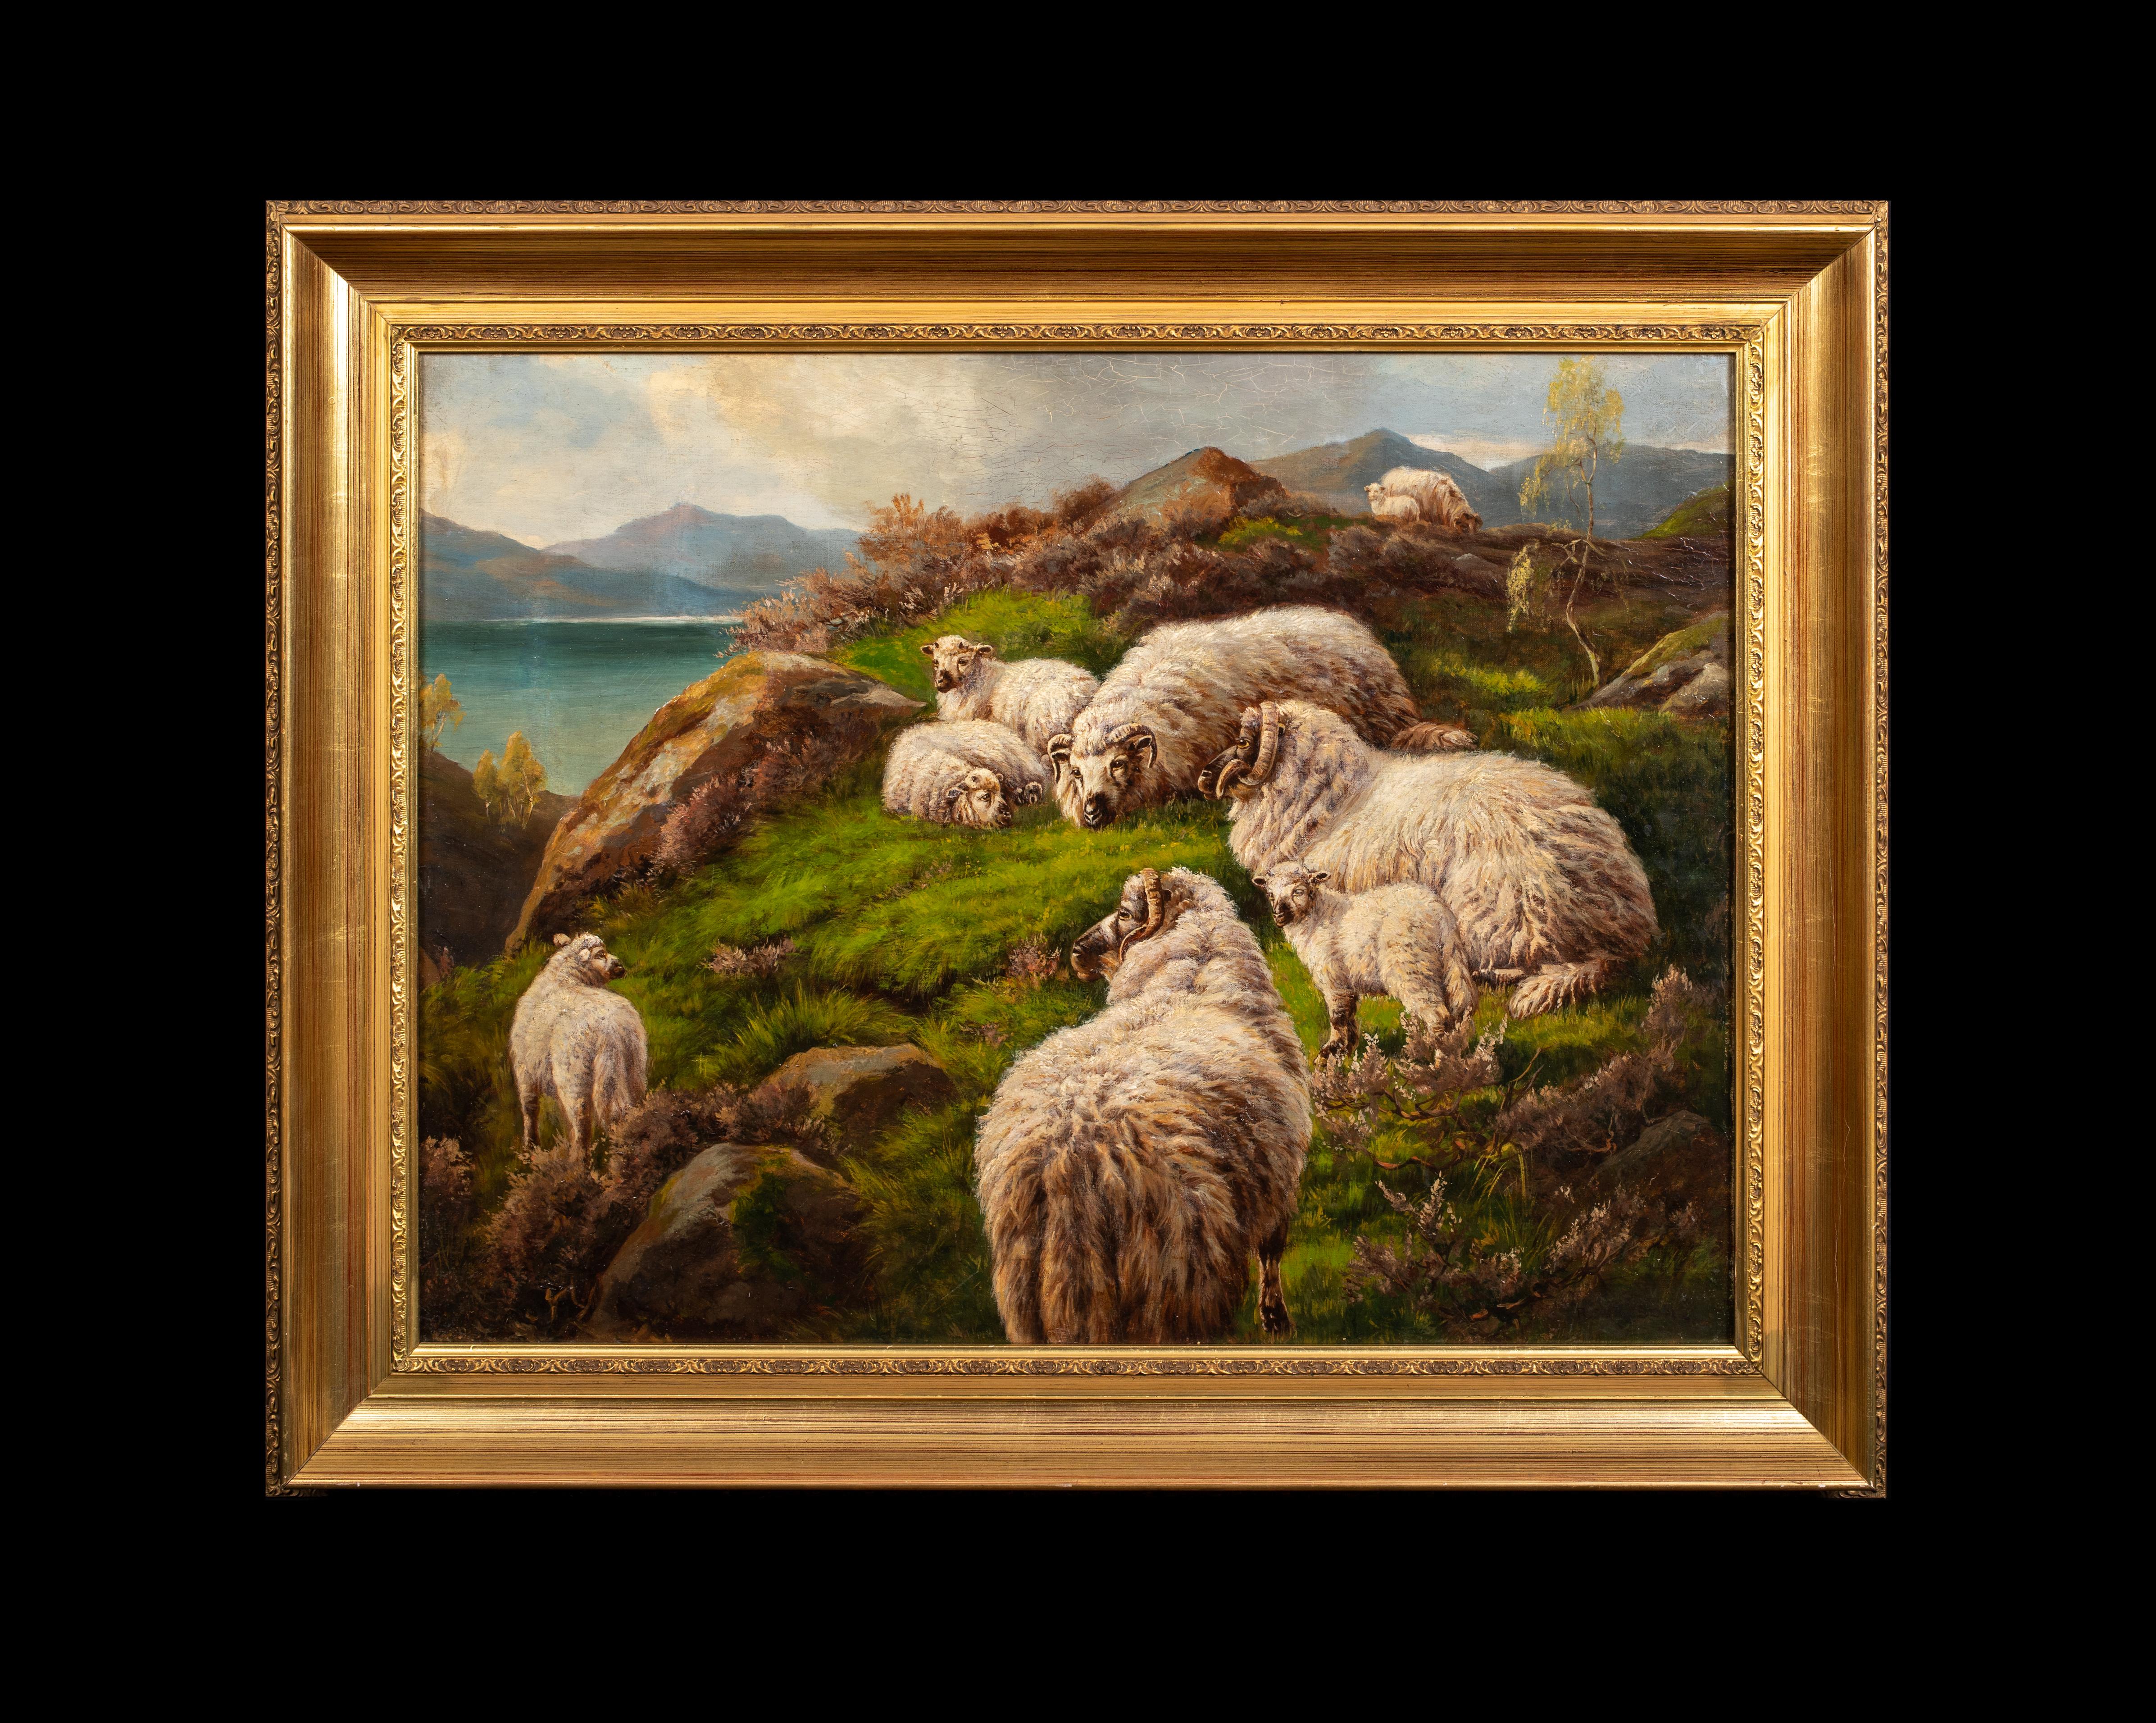 Highland Sheep Resting By Loch Lomond, 19th Century  - Painting by Robert Watson